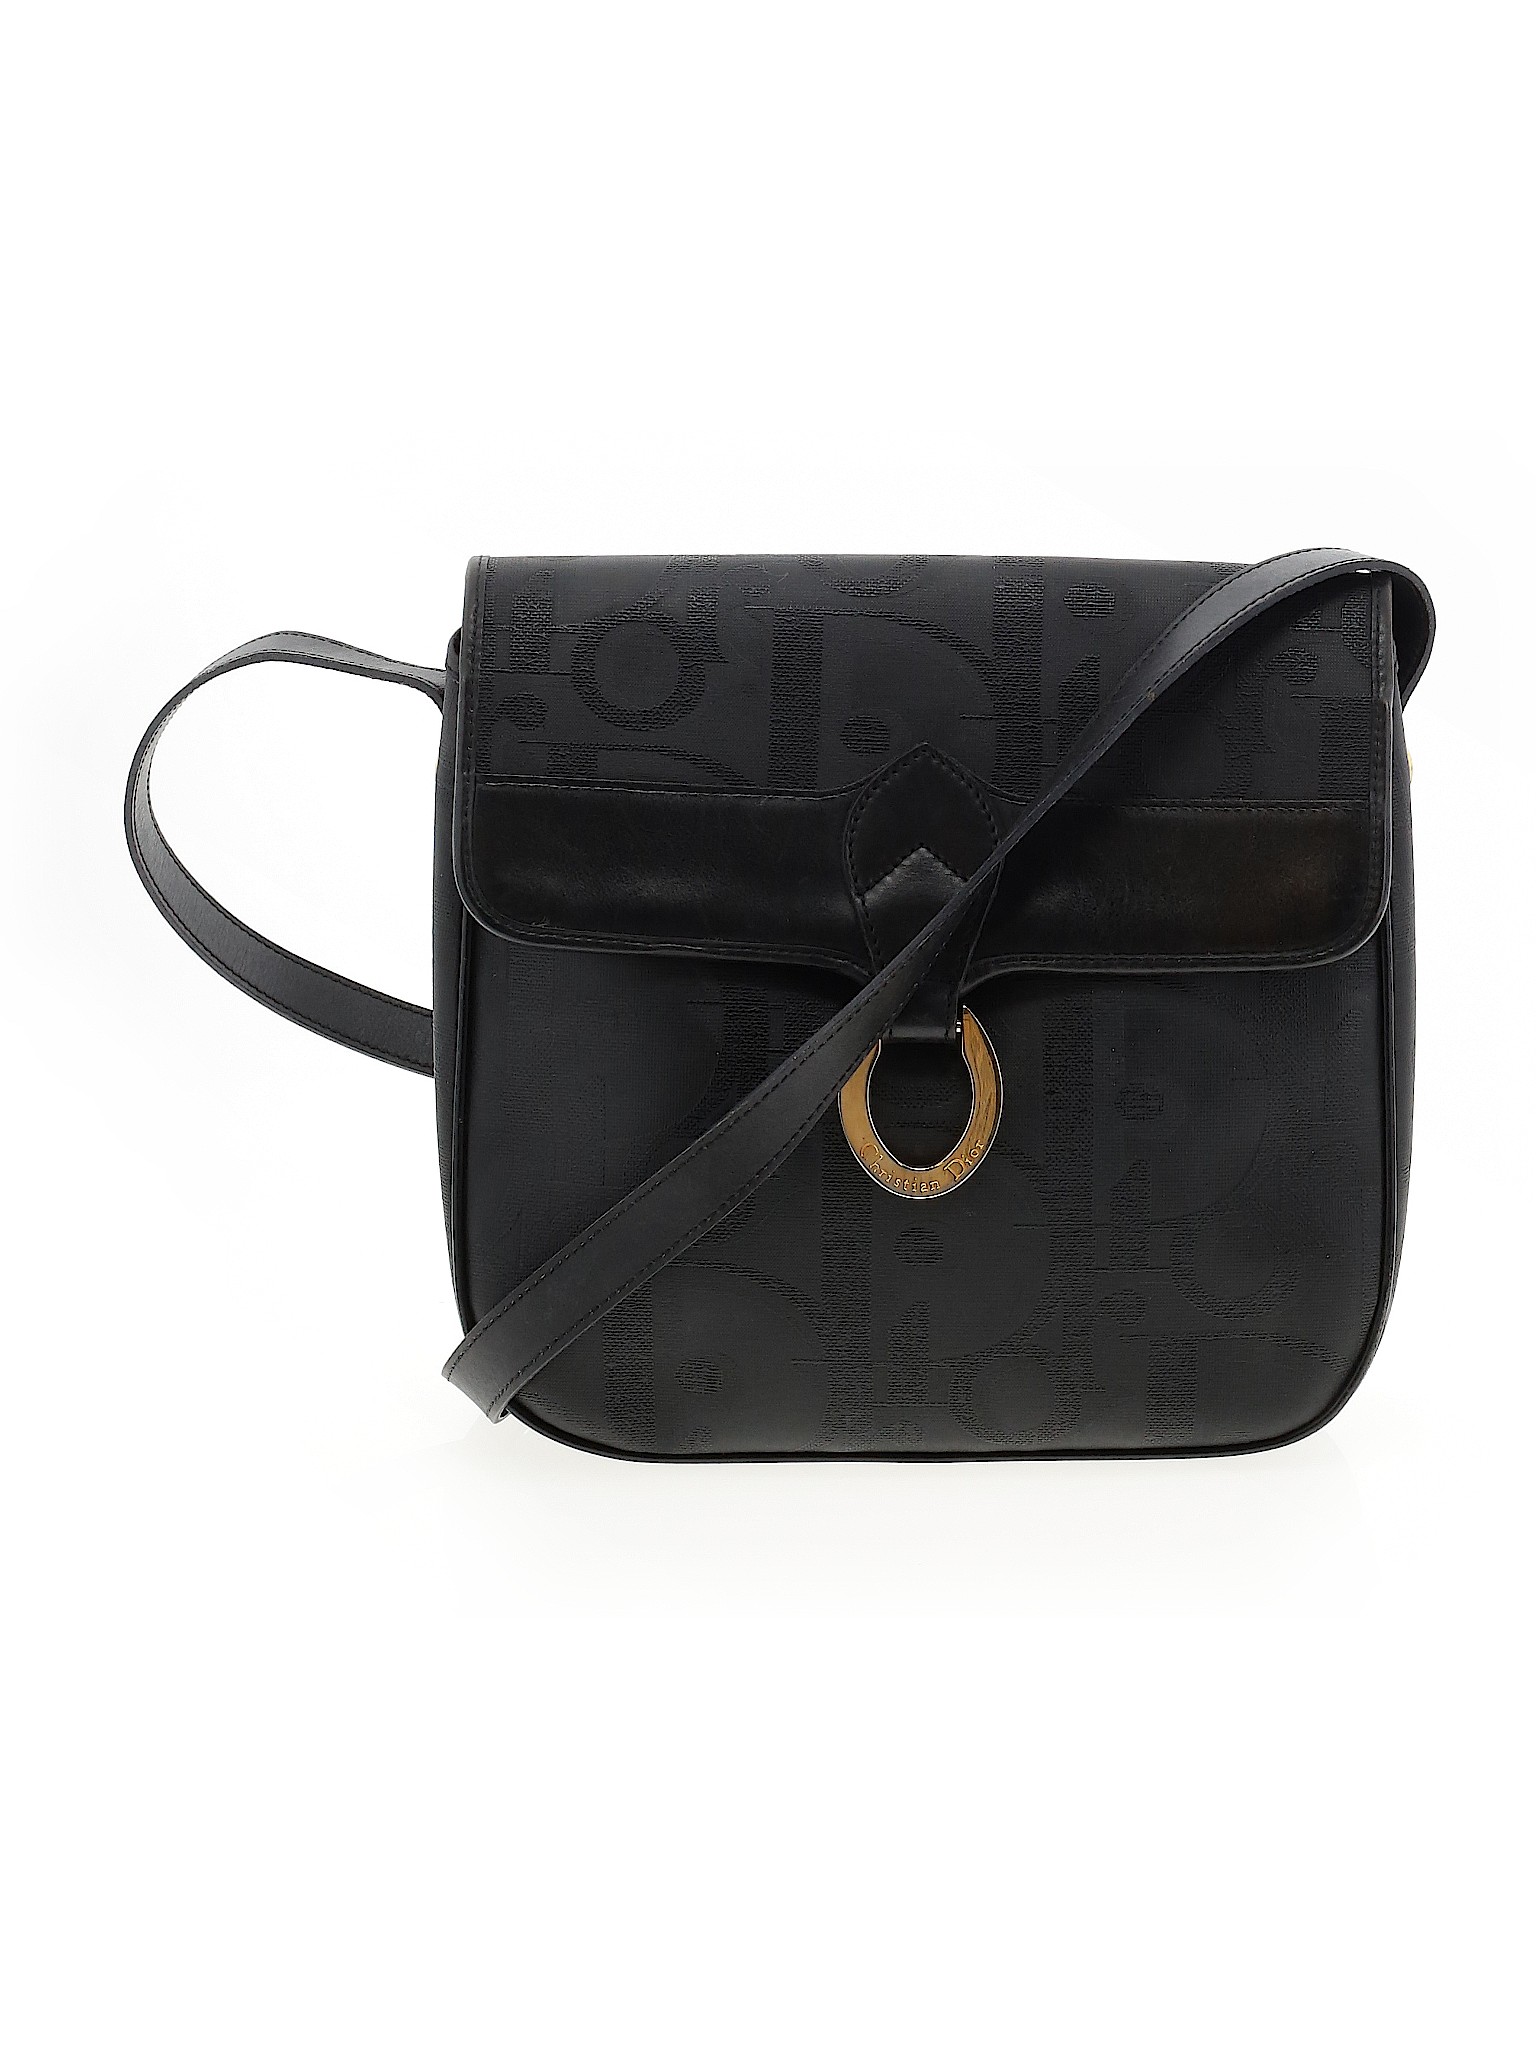 Christian Dior Solid Black Crossbody Bag One Size - 60% off | thredUP